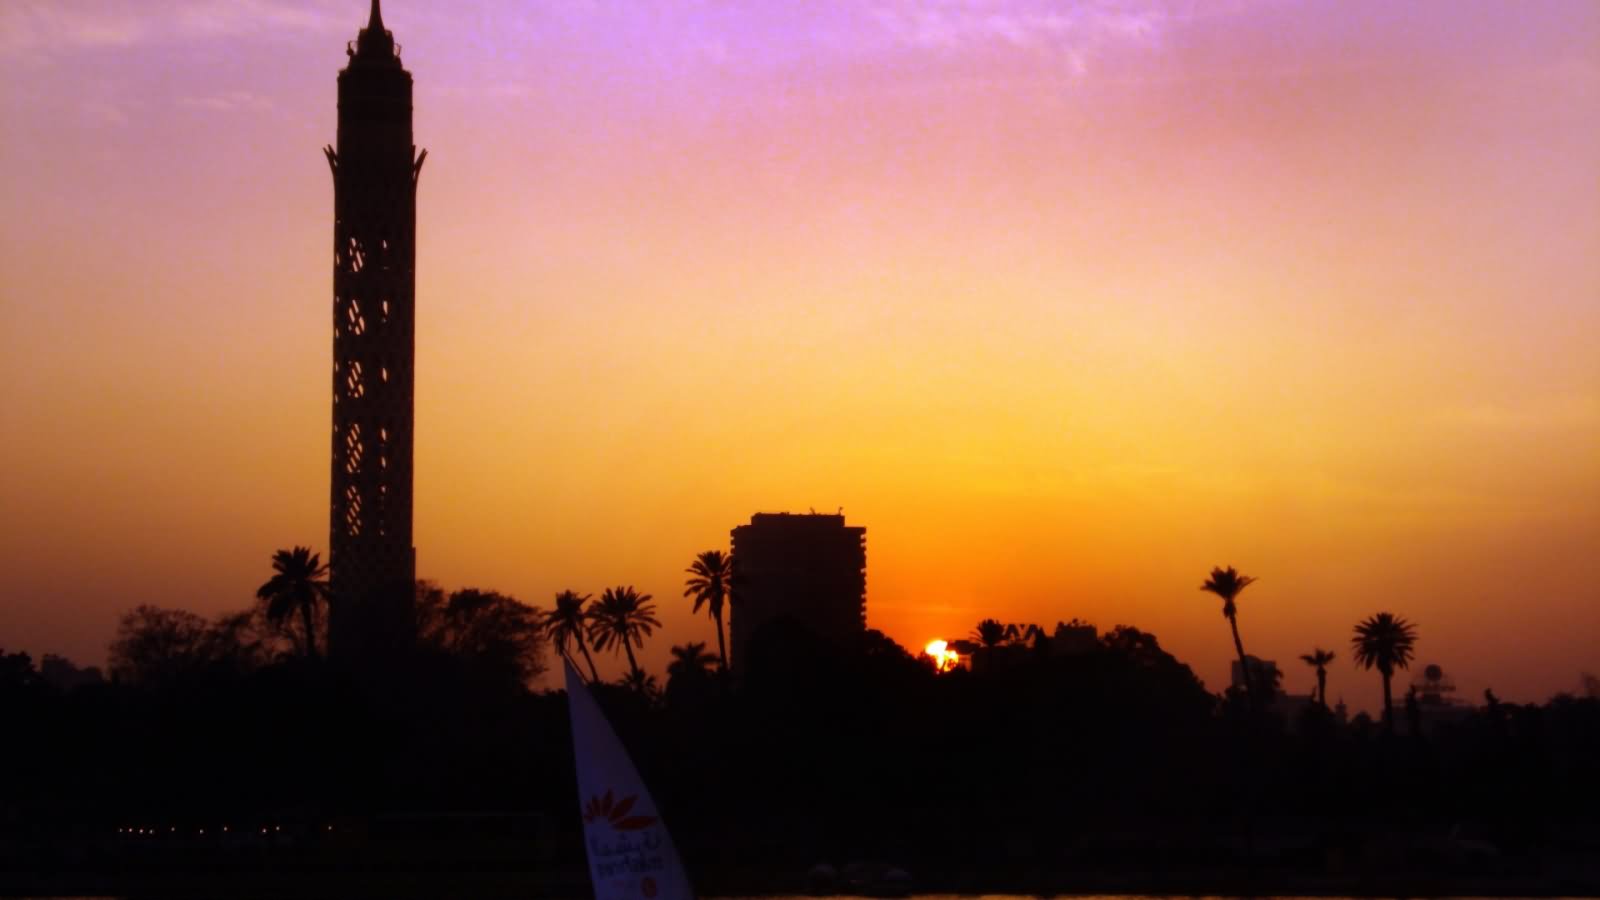 Cairo Tower Looks Beautiful During Sunset